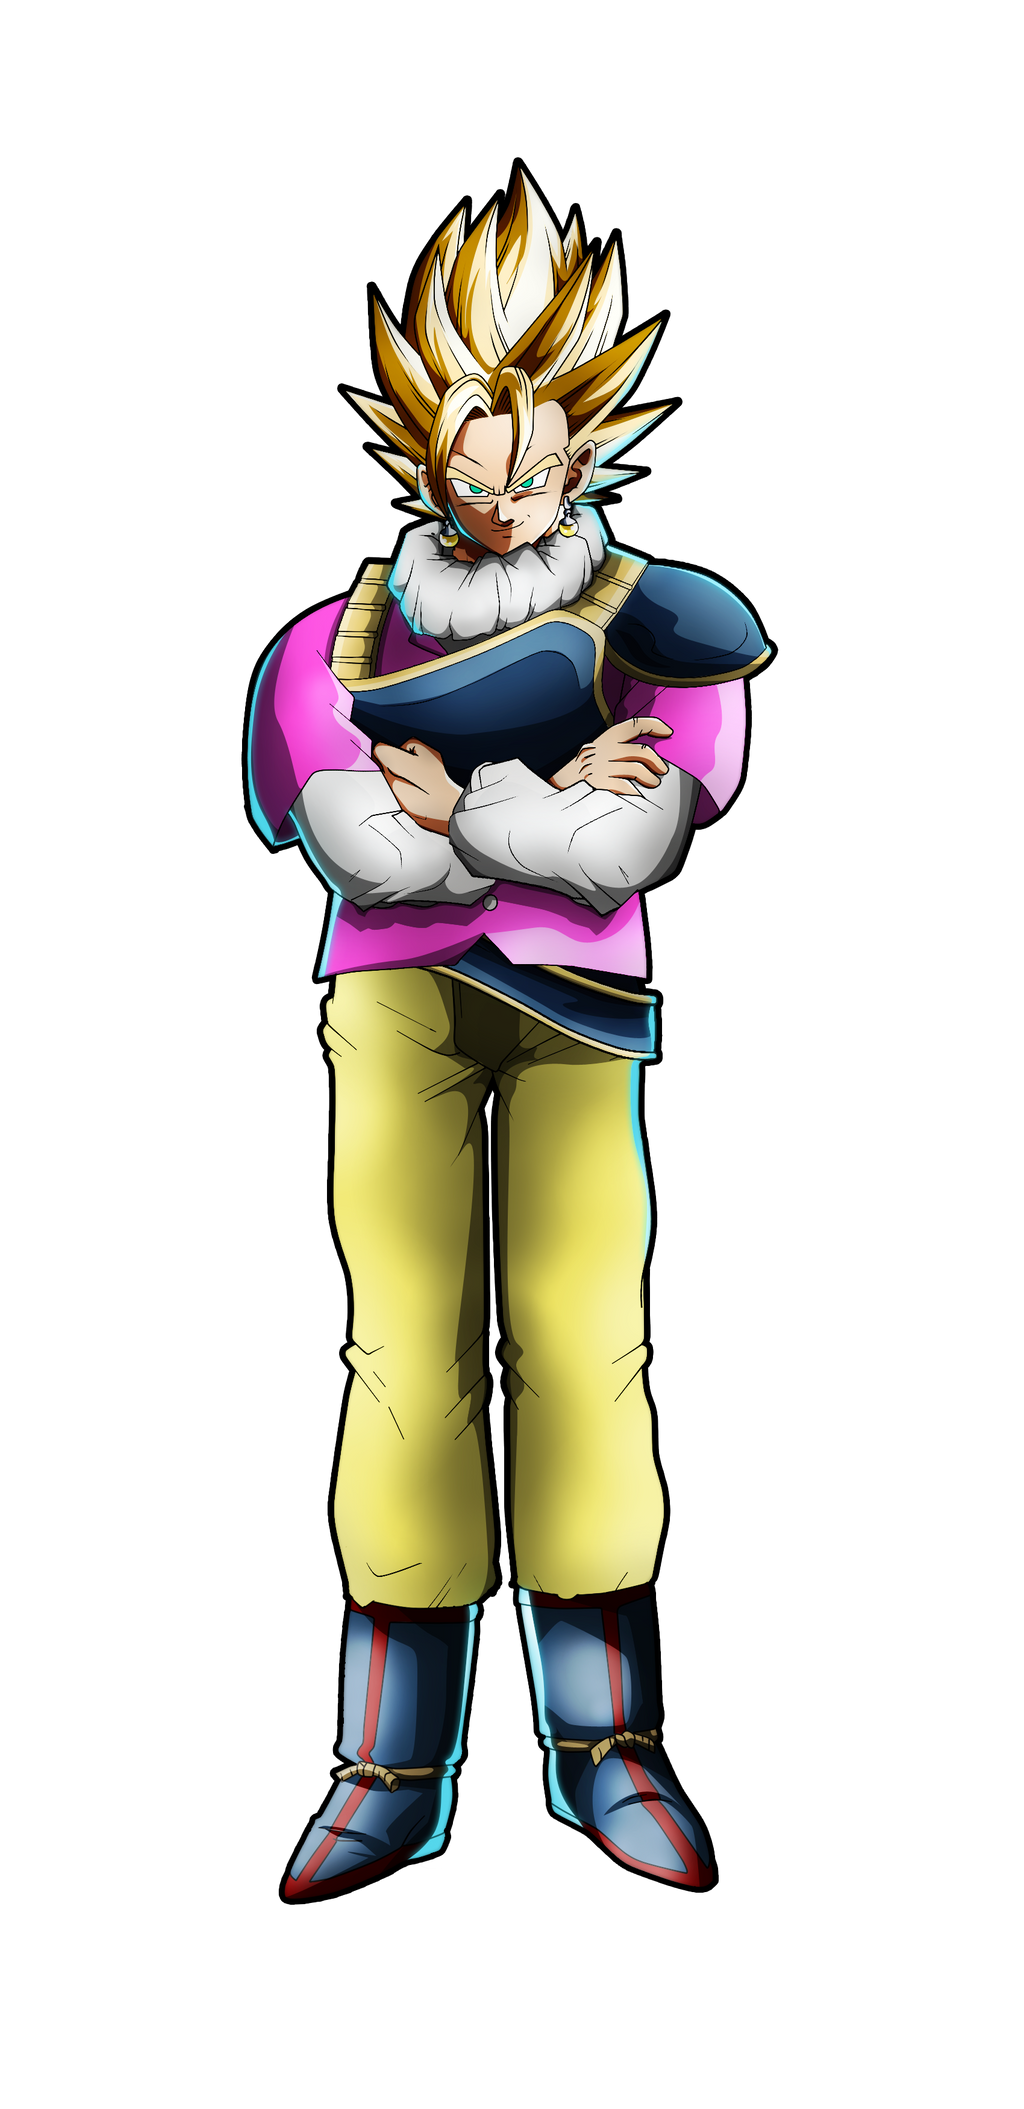 OC] Super Saiyan Vegito in the late Frieza/early Android Saga